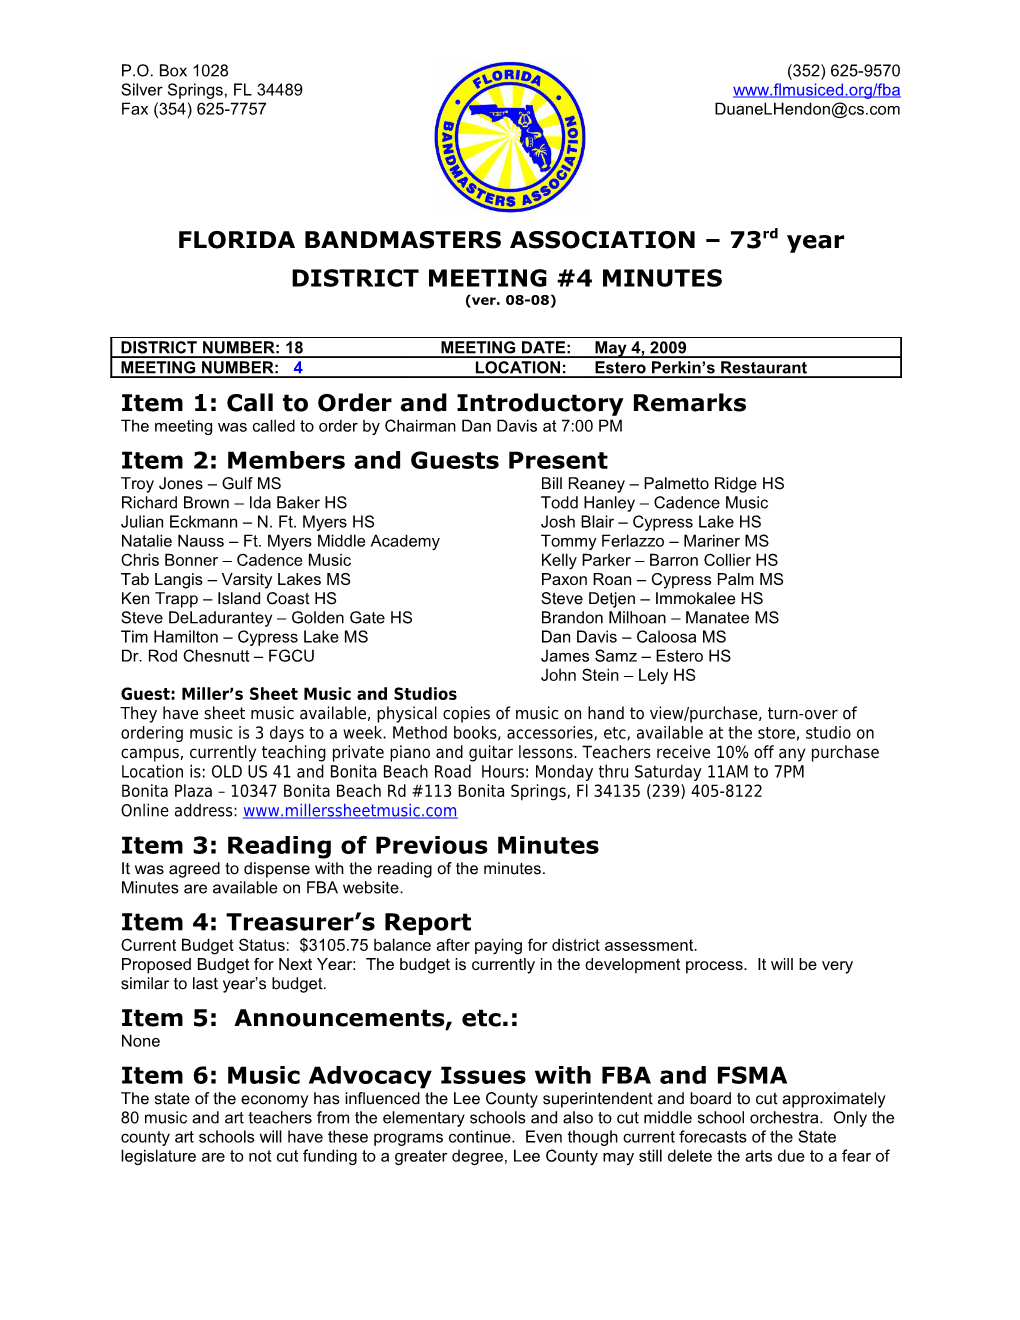 FLORIDA BANDMASTERS ASSOCIATION 73Rdyear